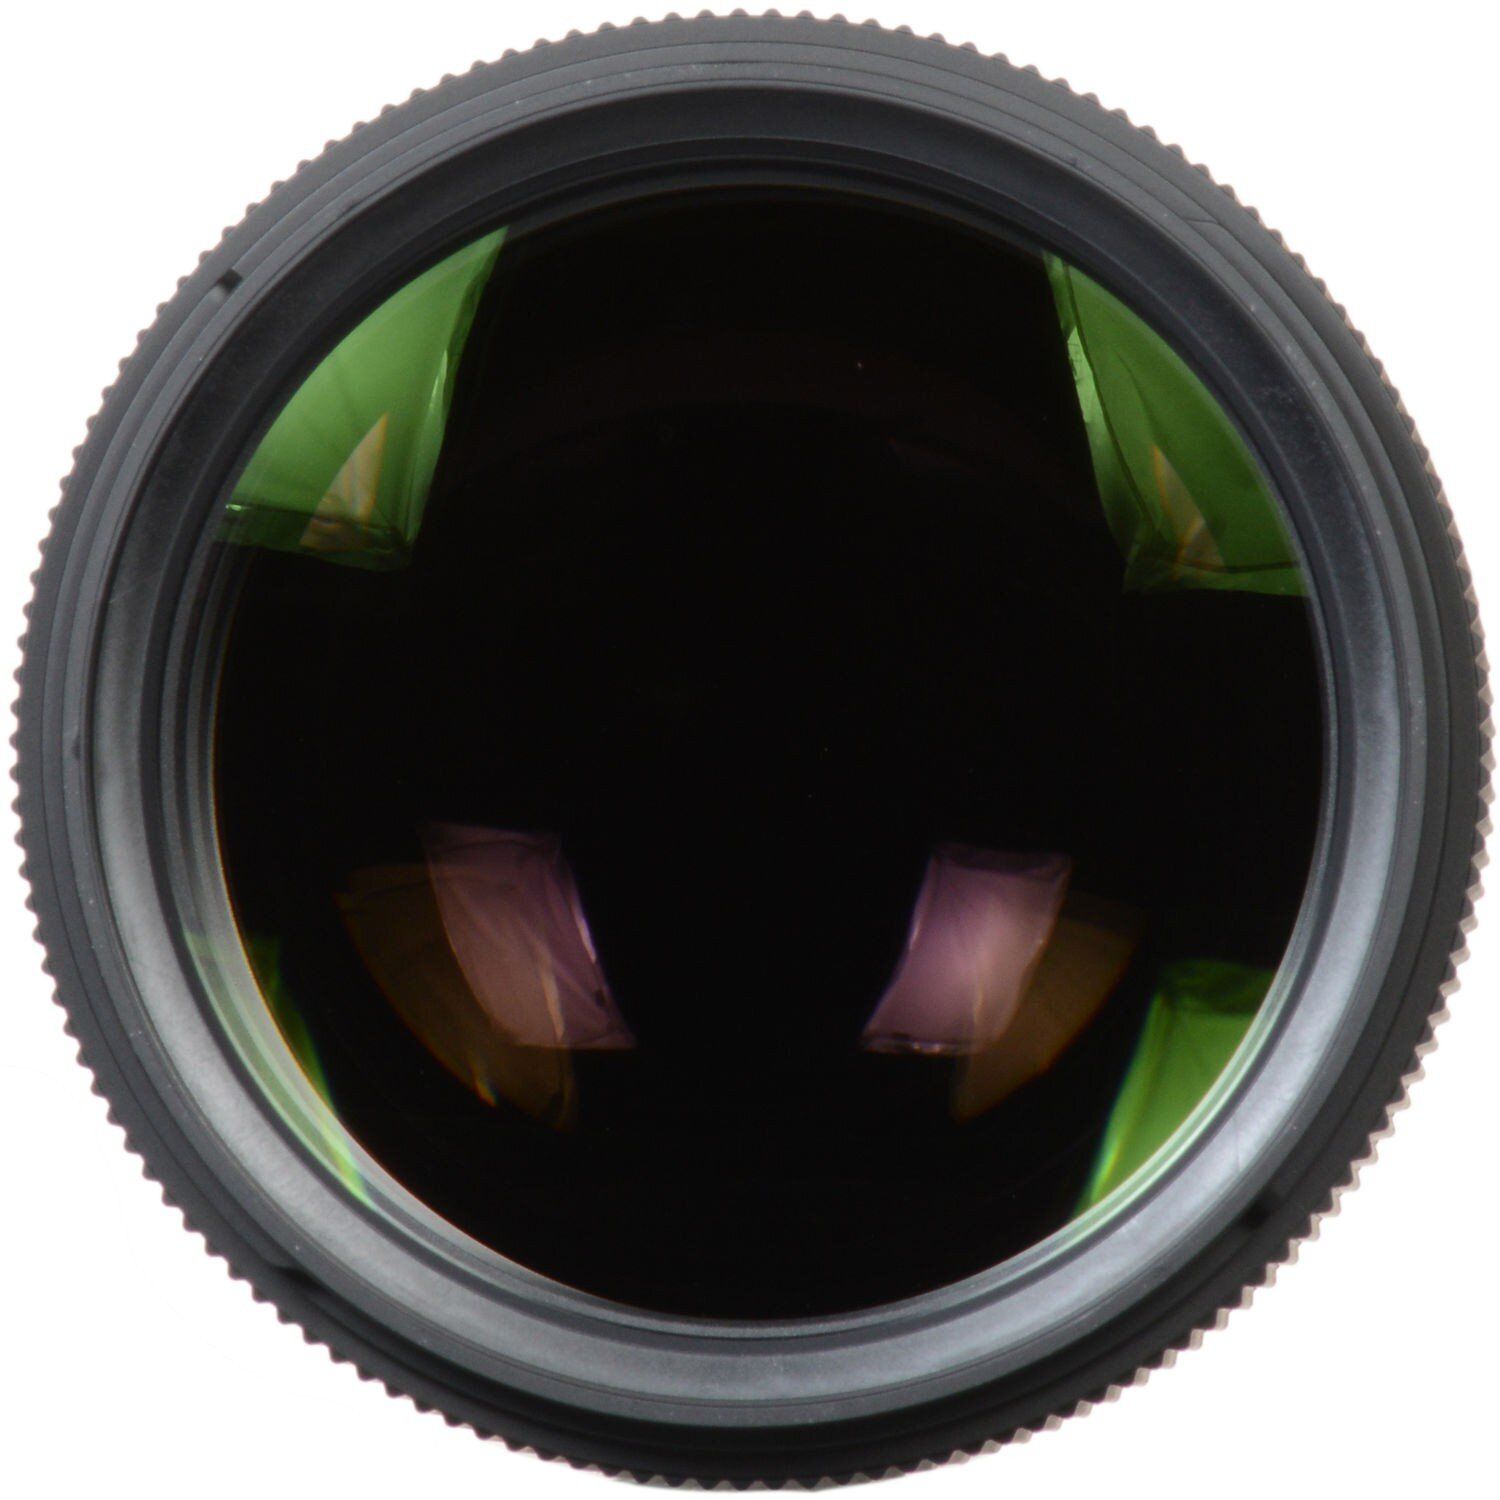 Объектив Sigma AF 135mm f/1.8 DG HSM Art Canon EF